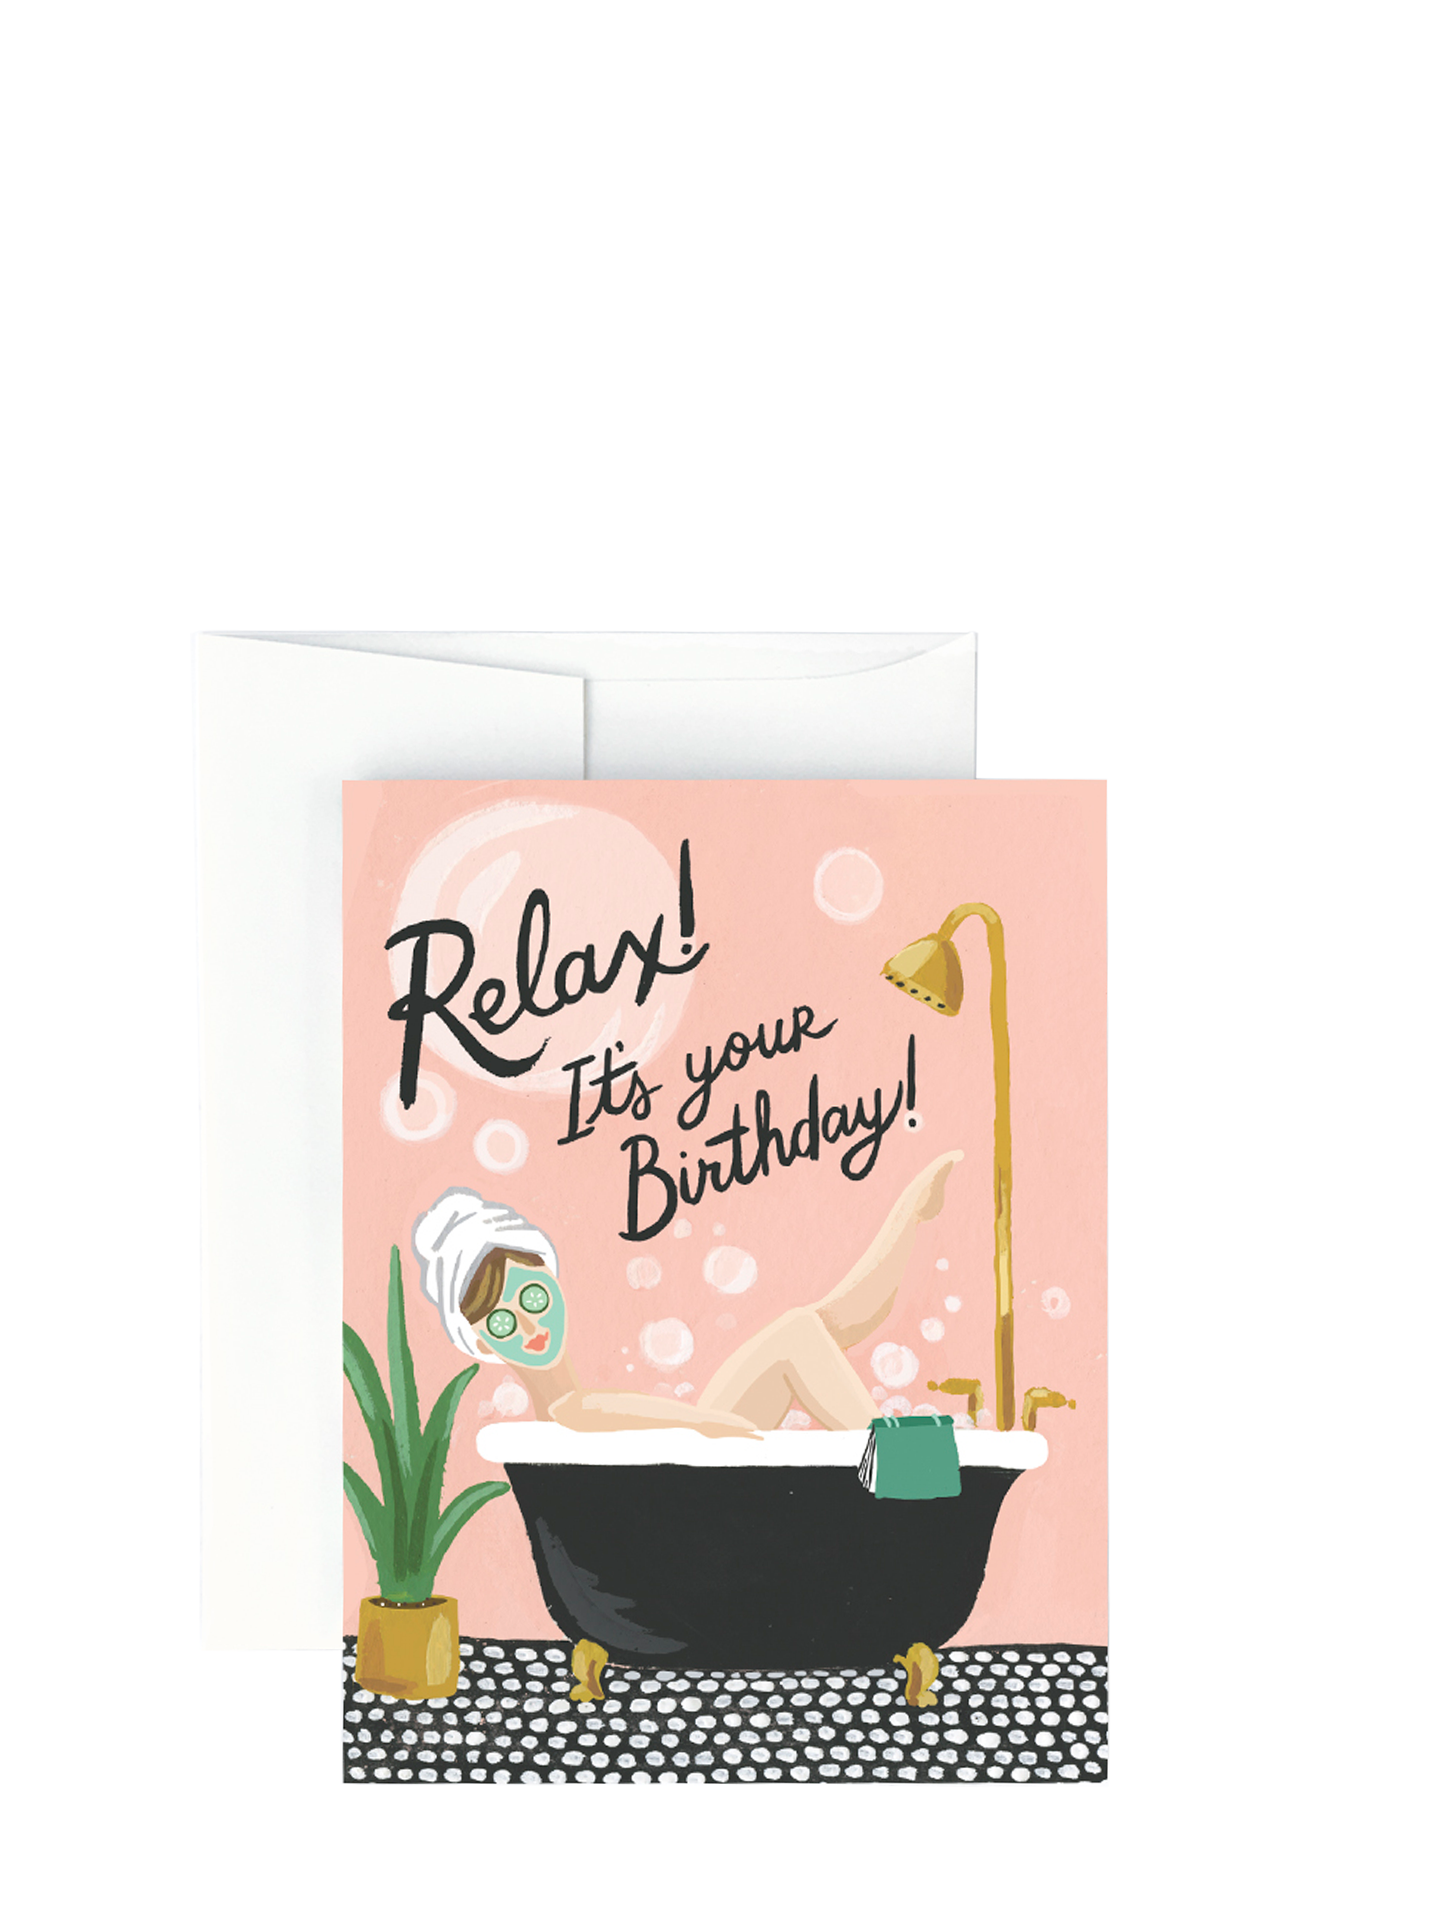 Relax It's Bubble Bath Birthday Card